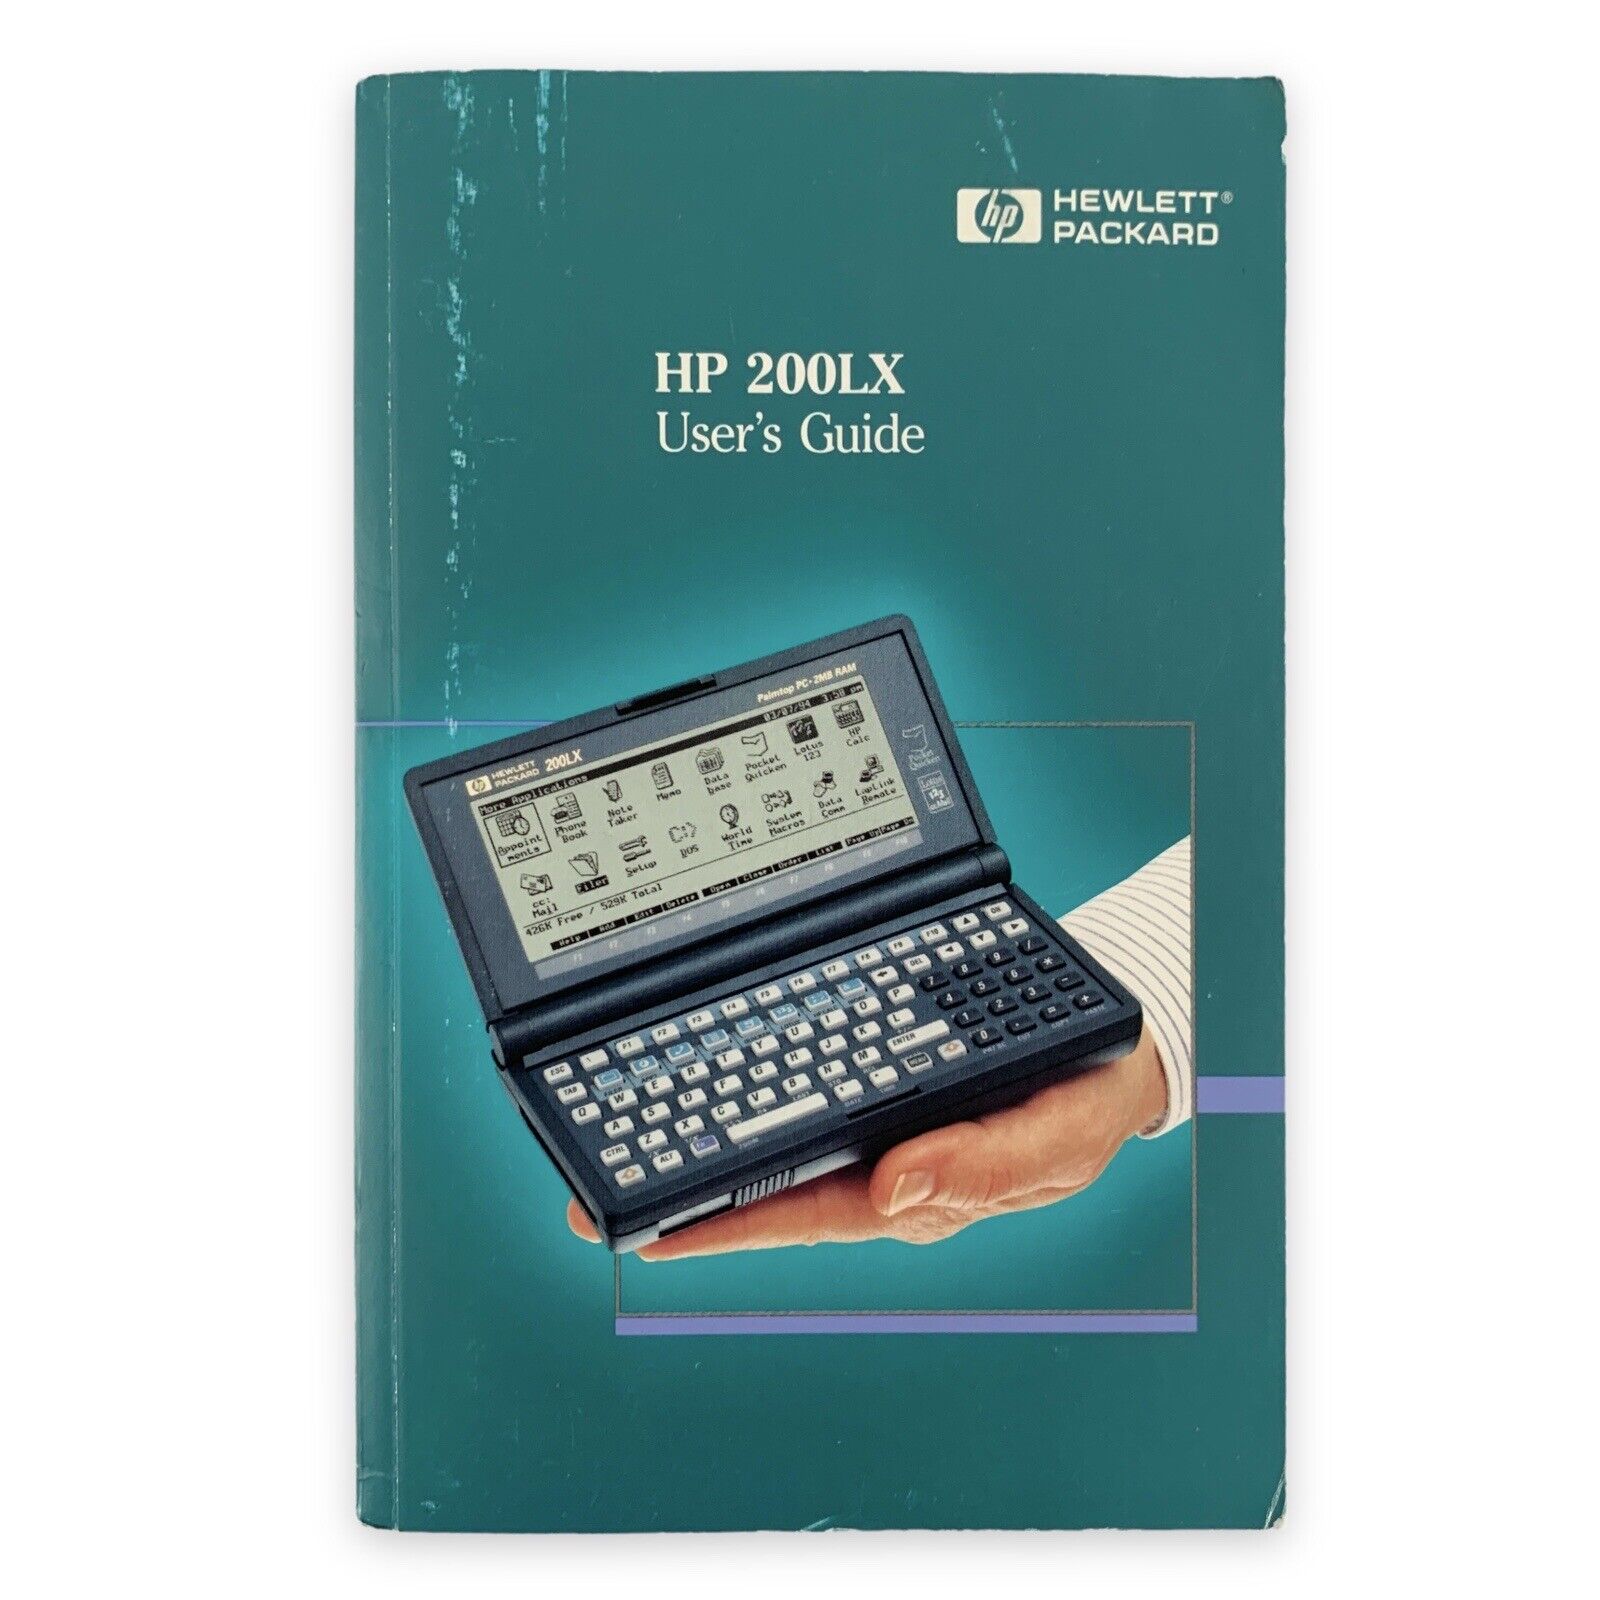 VTG 1994 Hewlett Packard HP 200LX User’s Guide Manual Edition 2